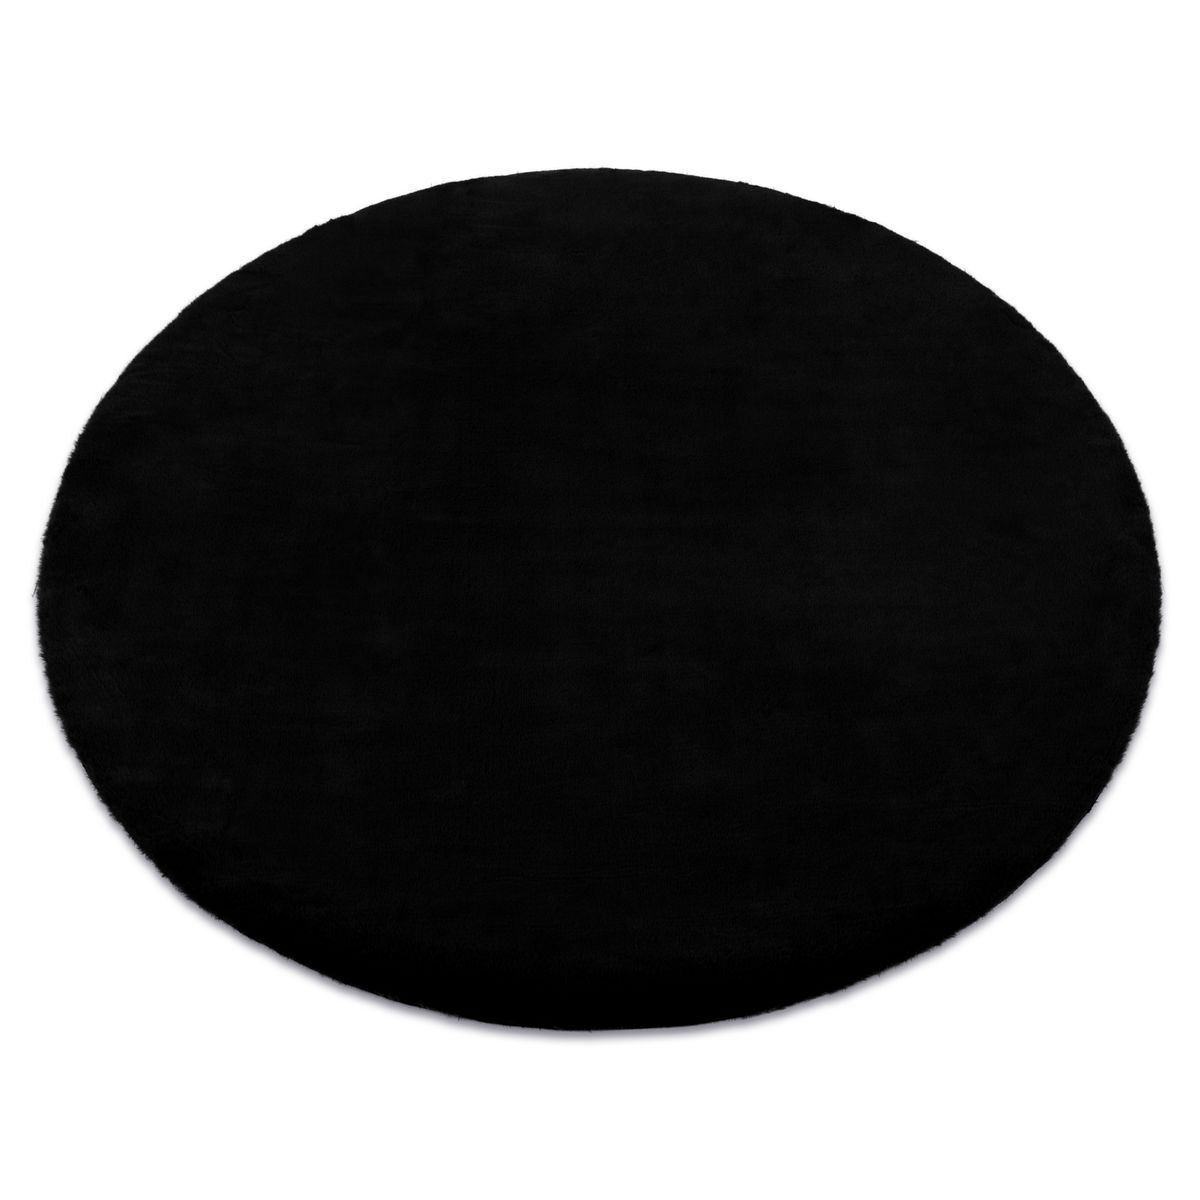 Taol Single Coloured Rug in Black, circle 100 cm - image 1